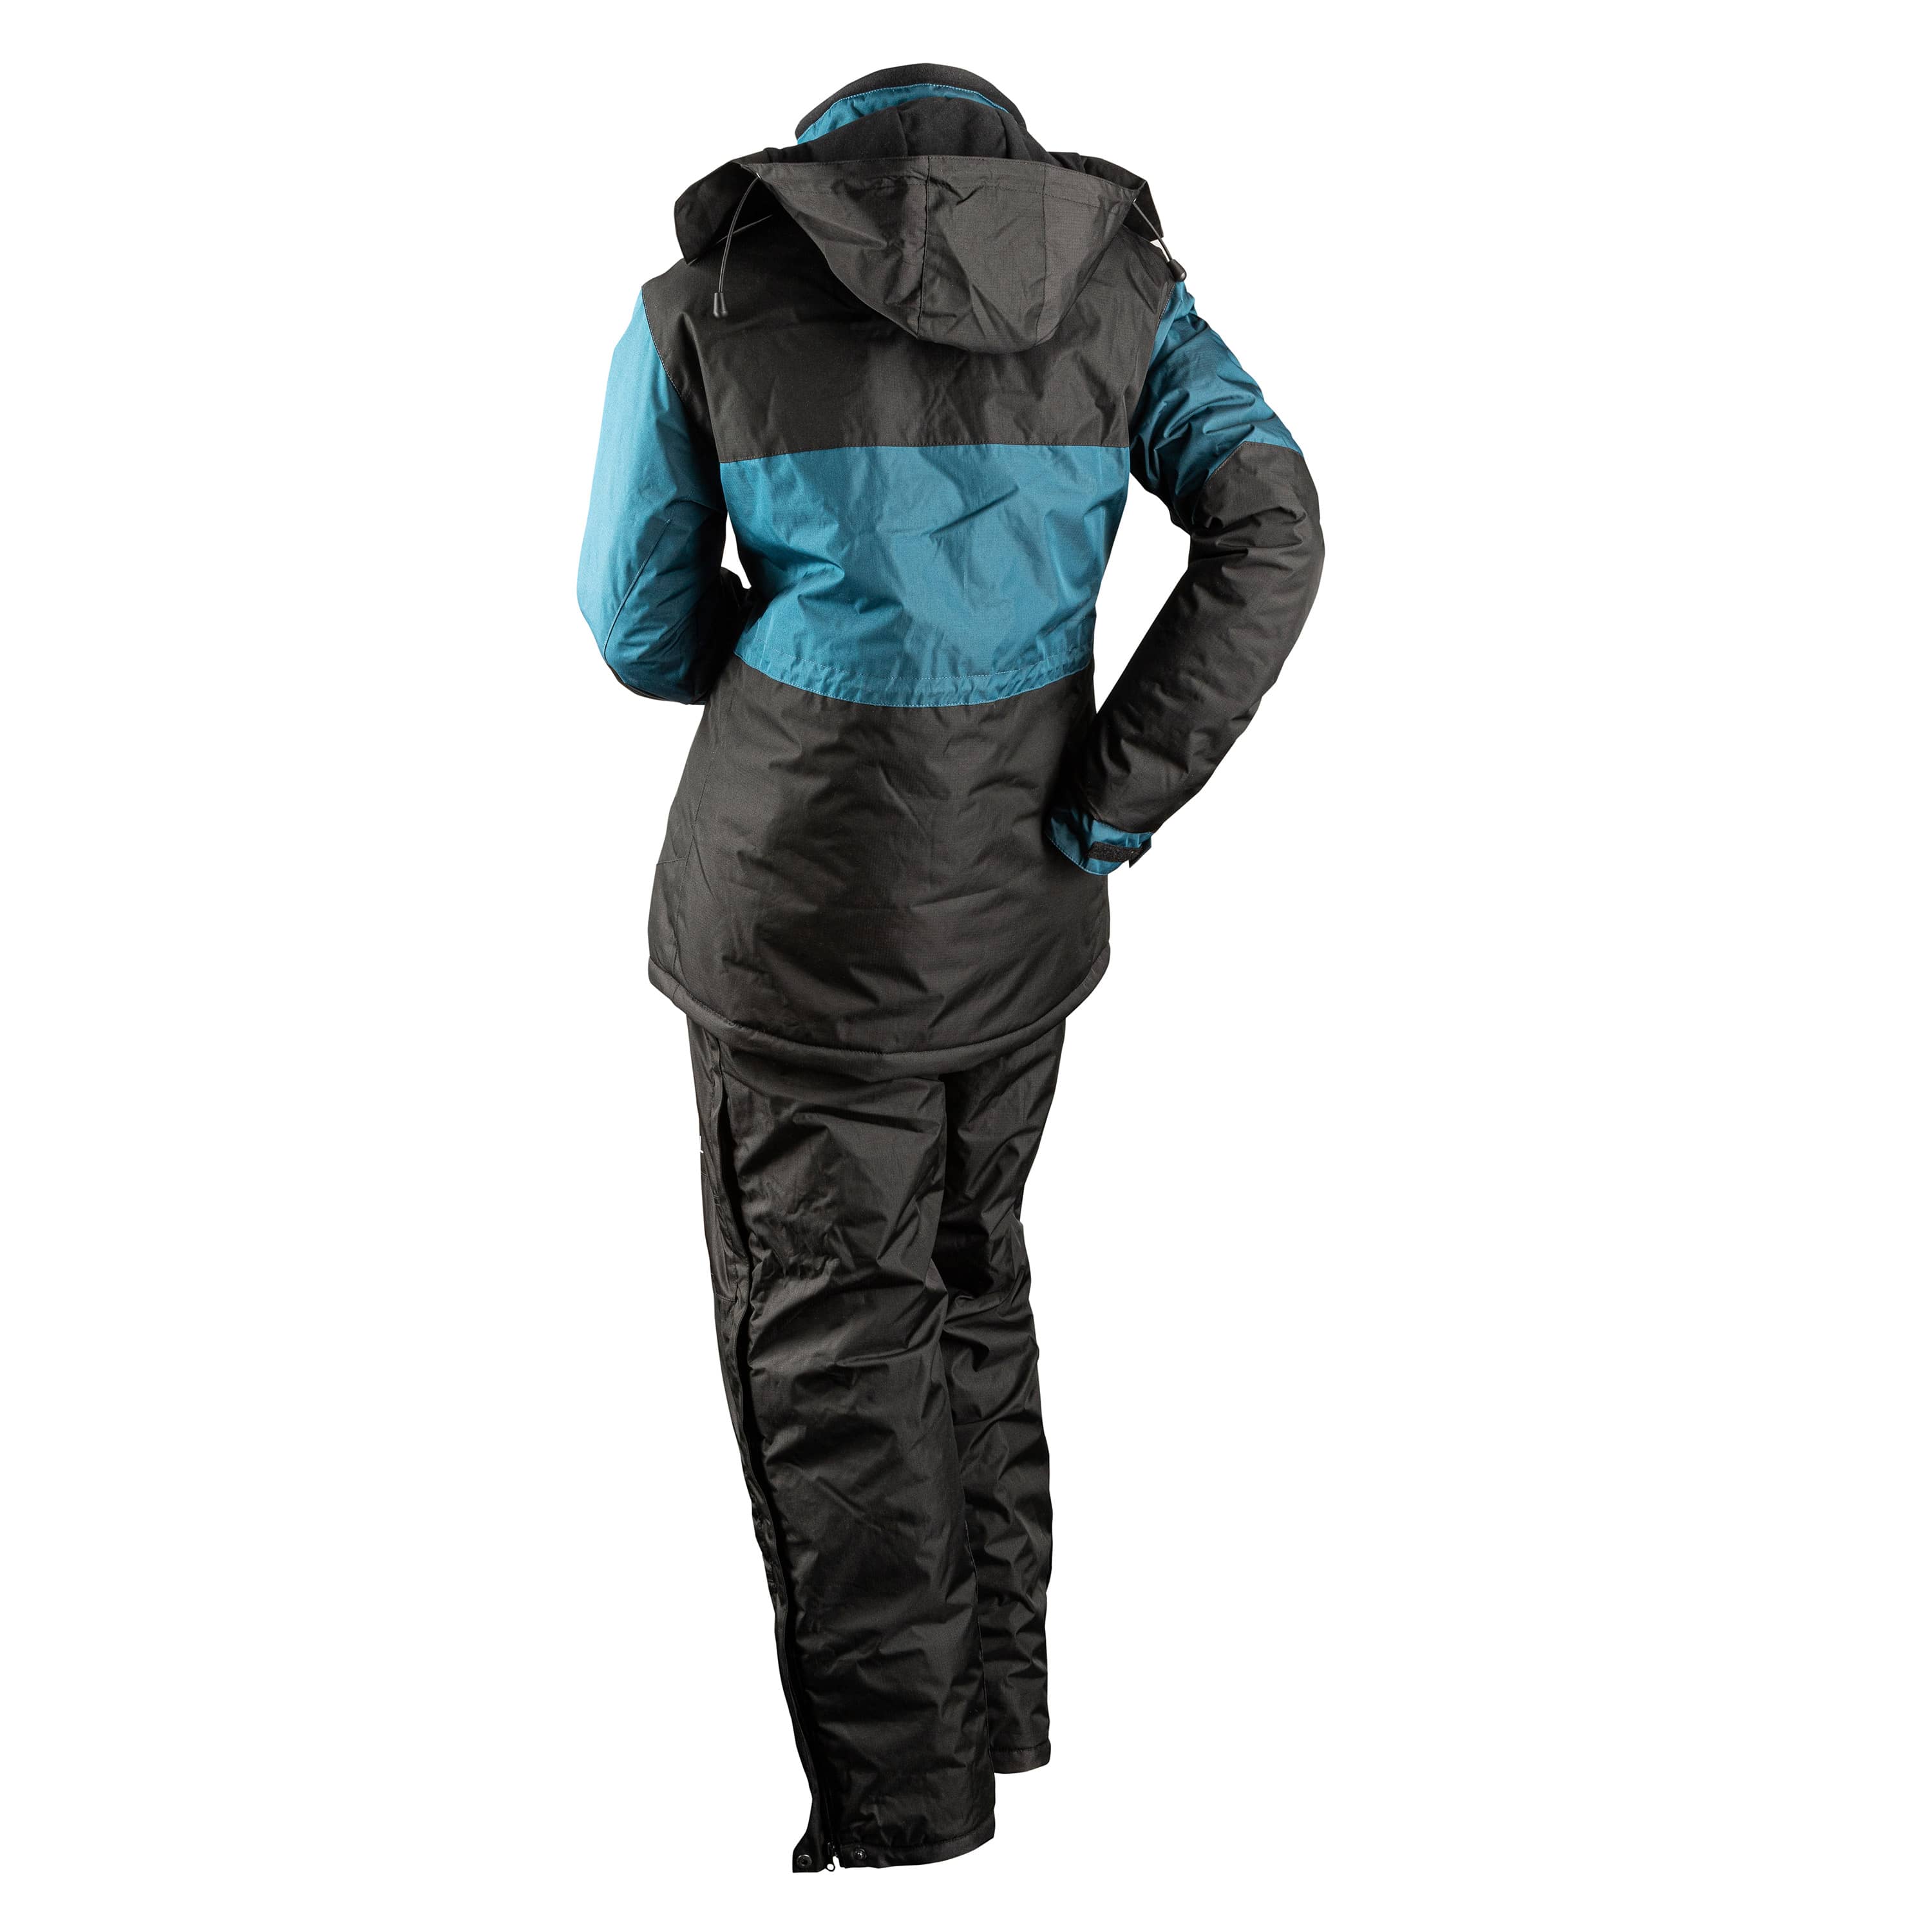 "Noroit II" Snowsuit kit - Women's